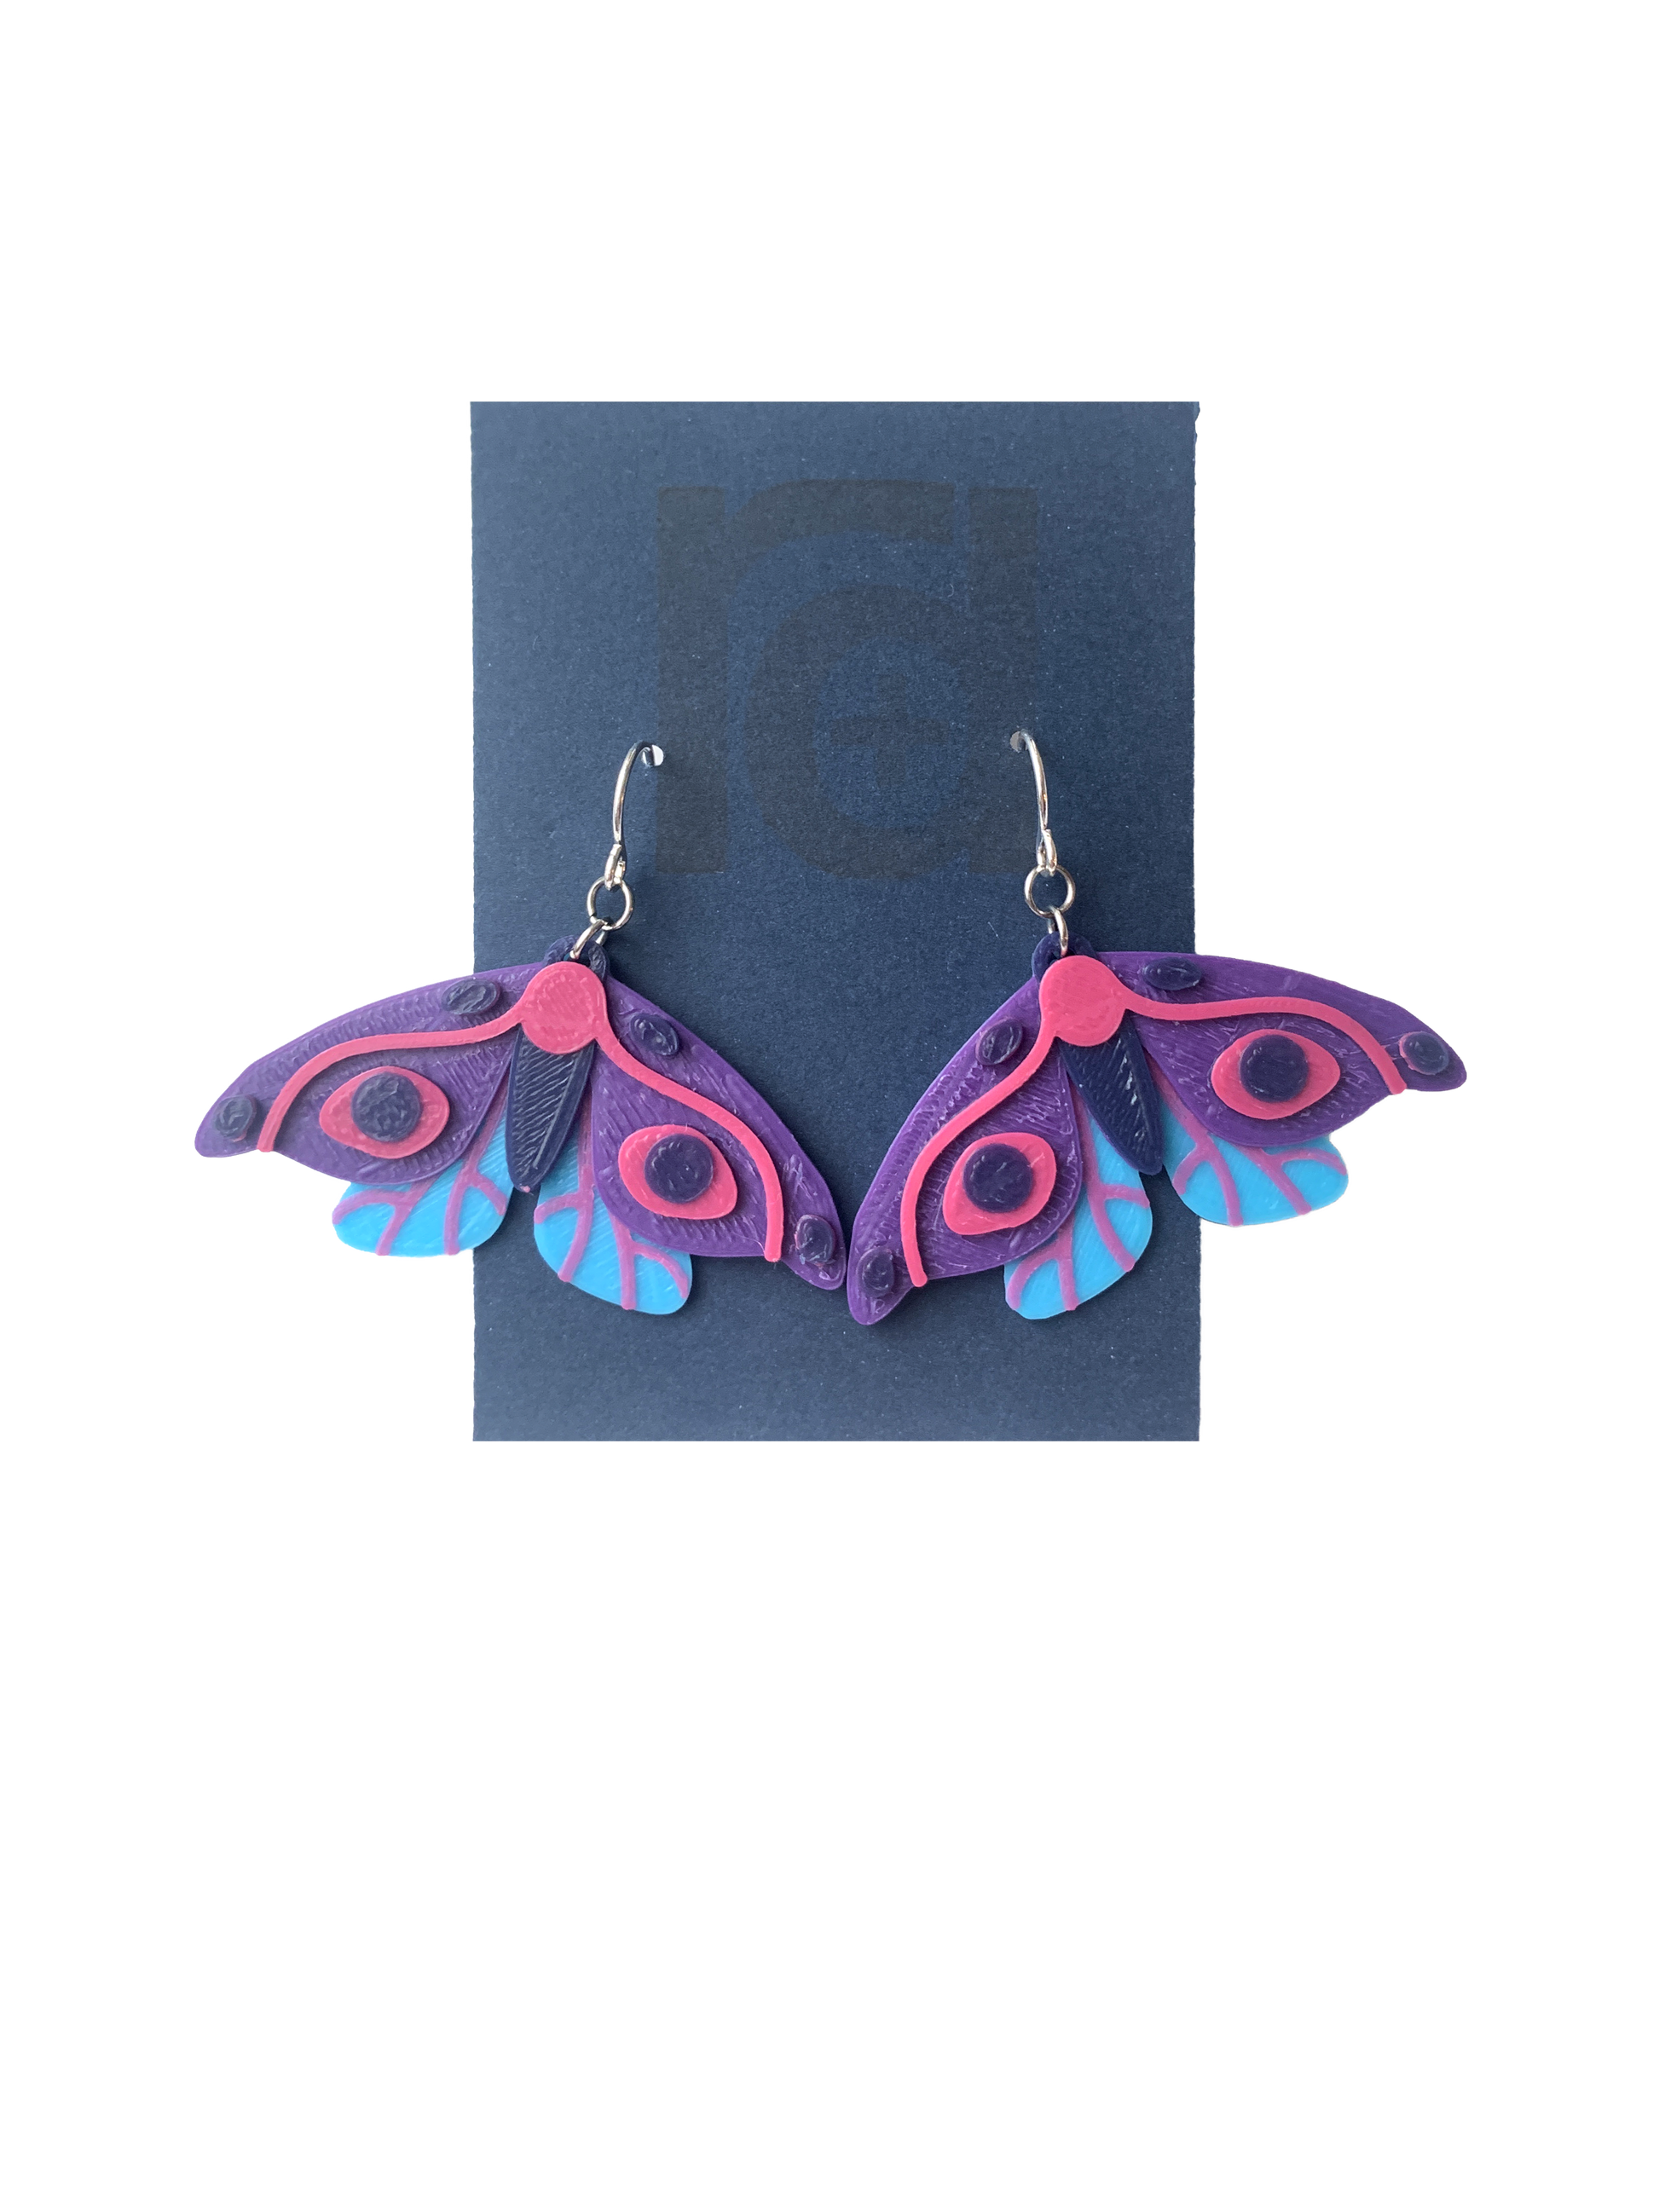 Butterfly backs for earrings, silicone earring stoppers - flower